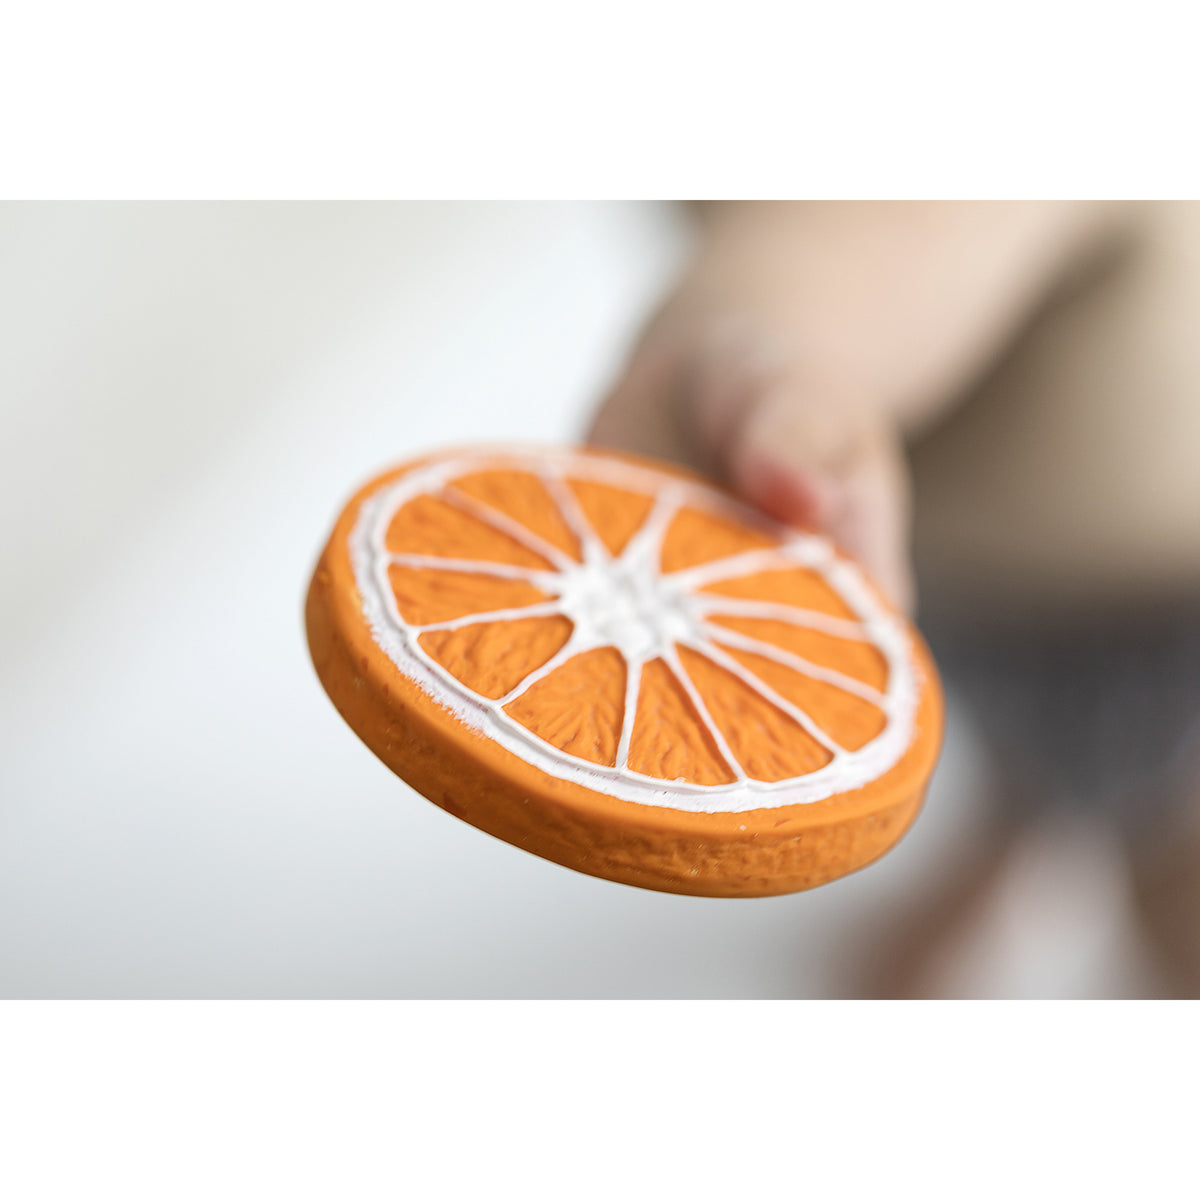 oli-&amp;-carol-clementino-the-orange- (7)